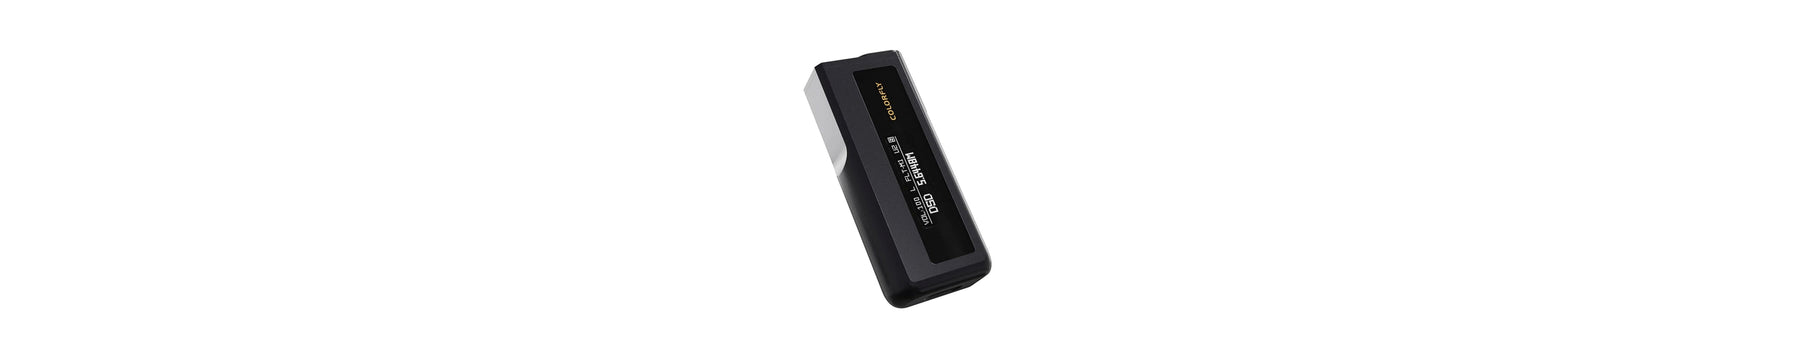 Colorfly CDA M2 High-Resolution Portable USB DAC/AMP With Dual CS43198 Flagship DAC Chips